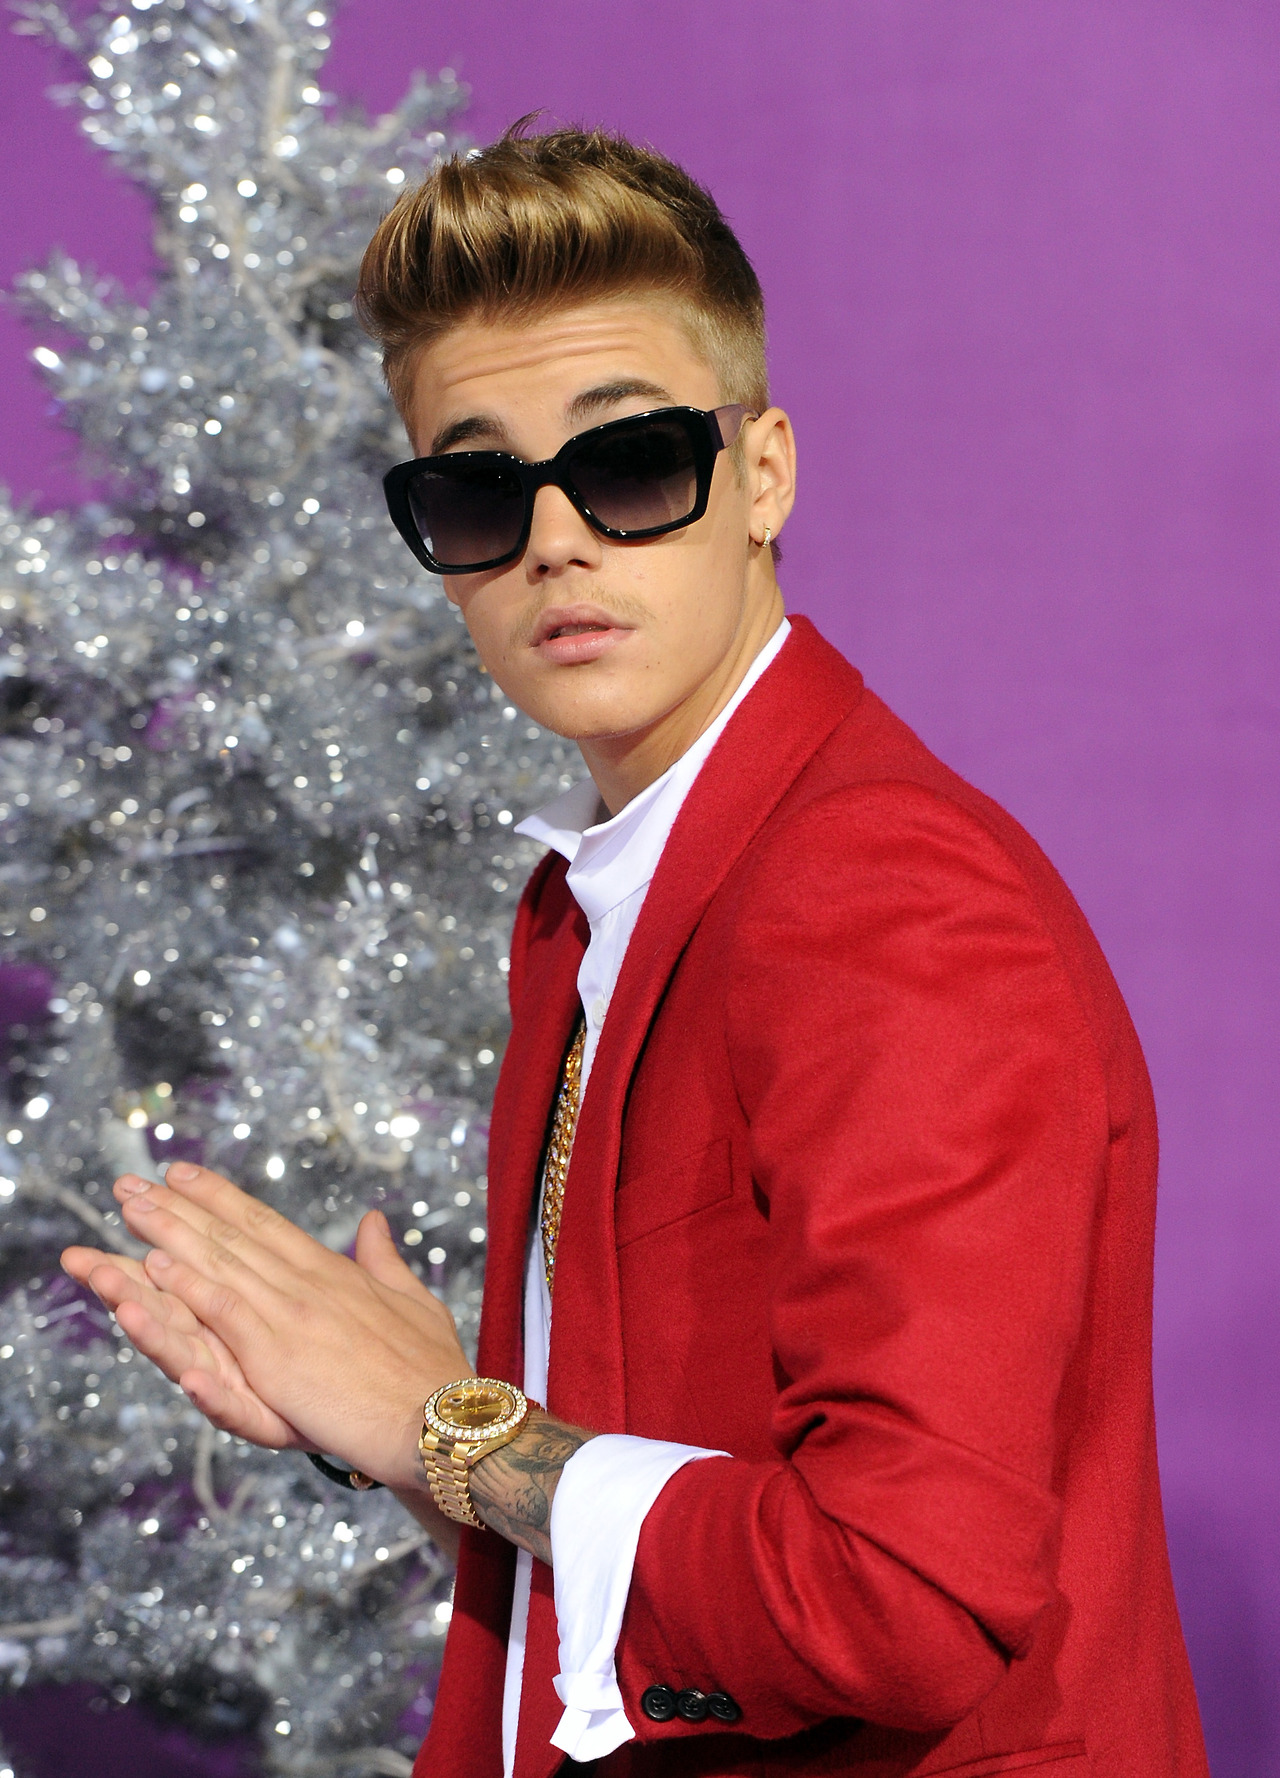 Premiere Of Open Road Films' "Justin Bieber's Believe" - Red Carpet